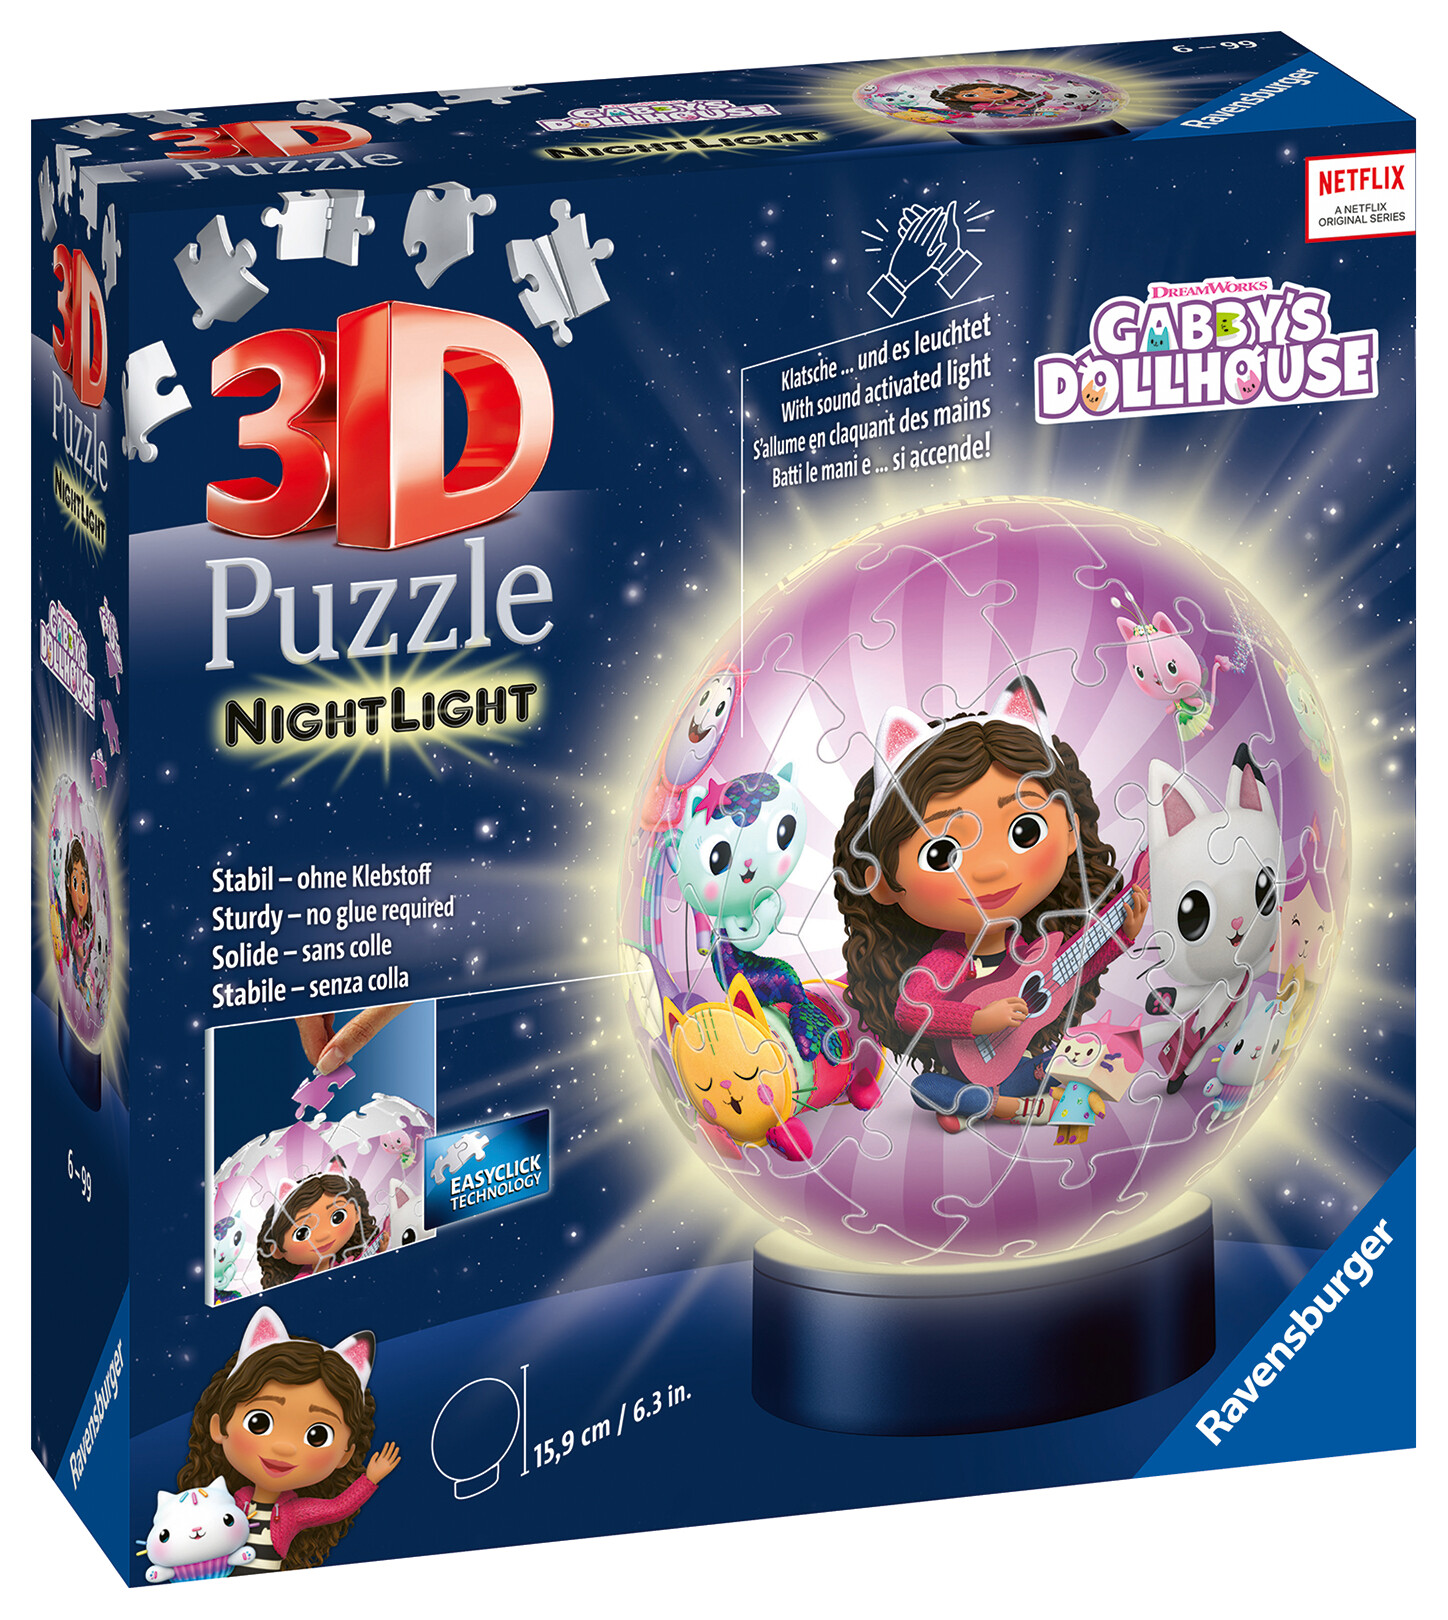 Ravensburger - 3d puzzle nightlamp gabby's dollhouse, night lamp, 72 pezzi, 6+ anni - RAVENSBURGER 3D PUZZLE